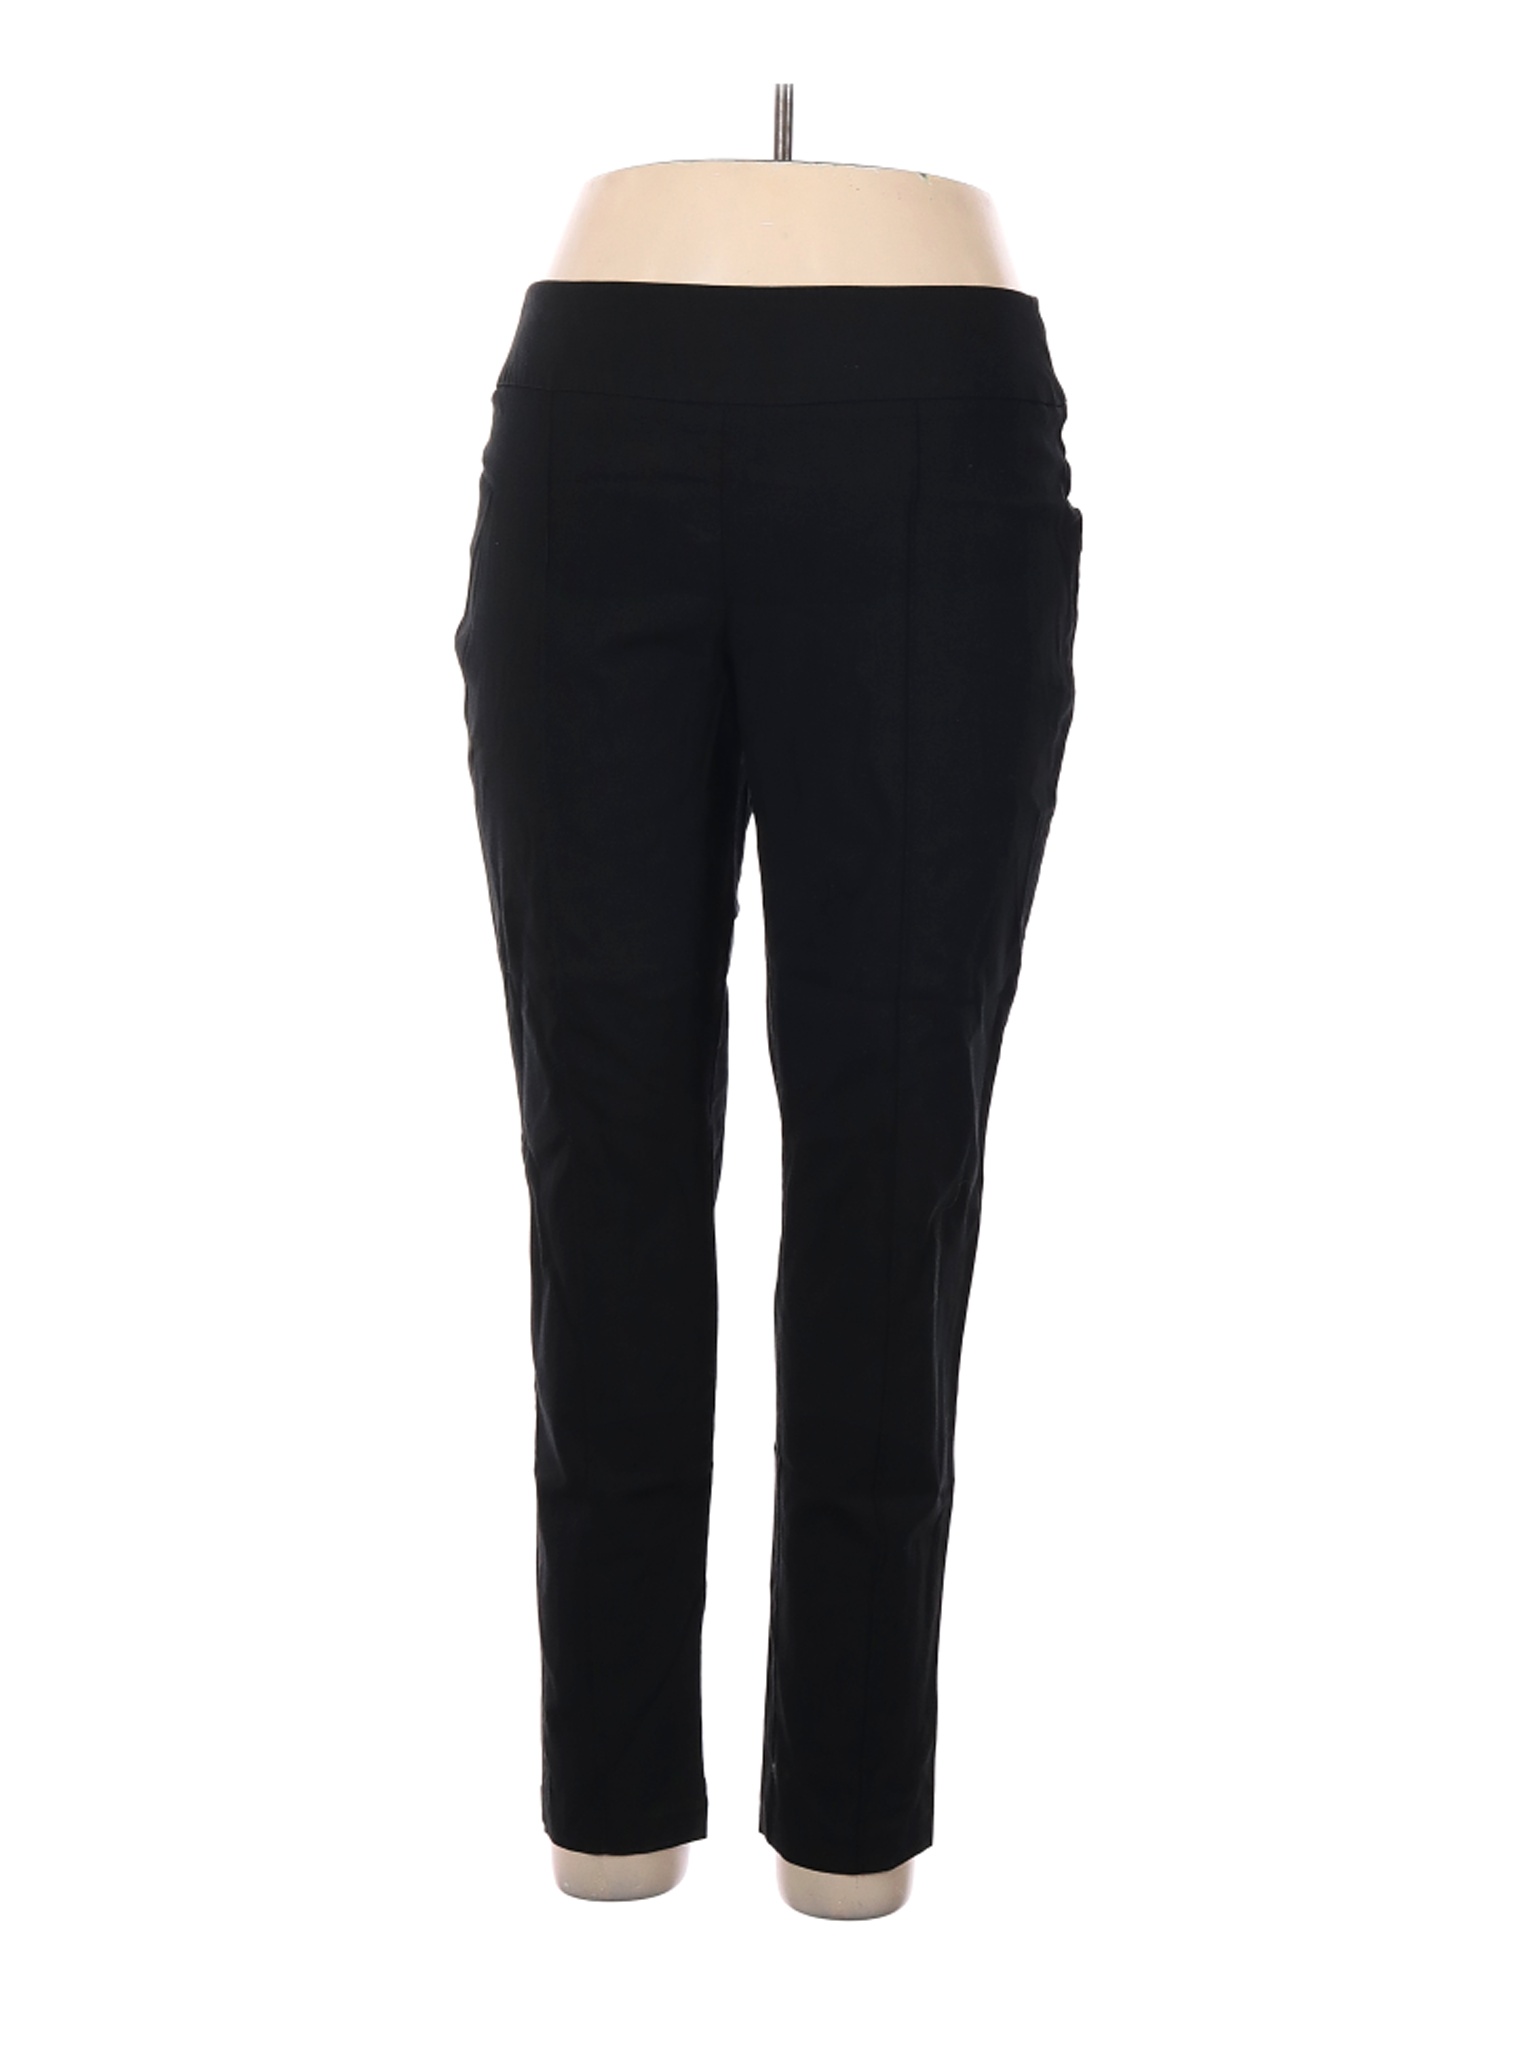 Cato Women Black Casual Pants 16 | eBay